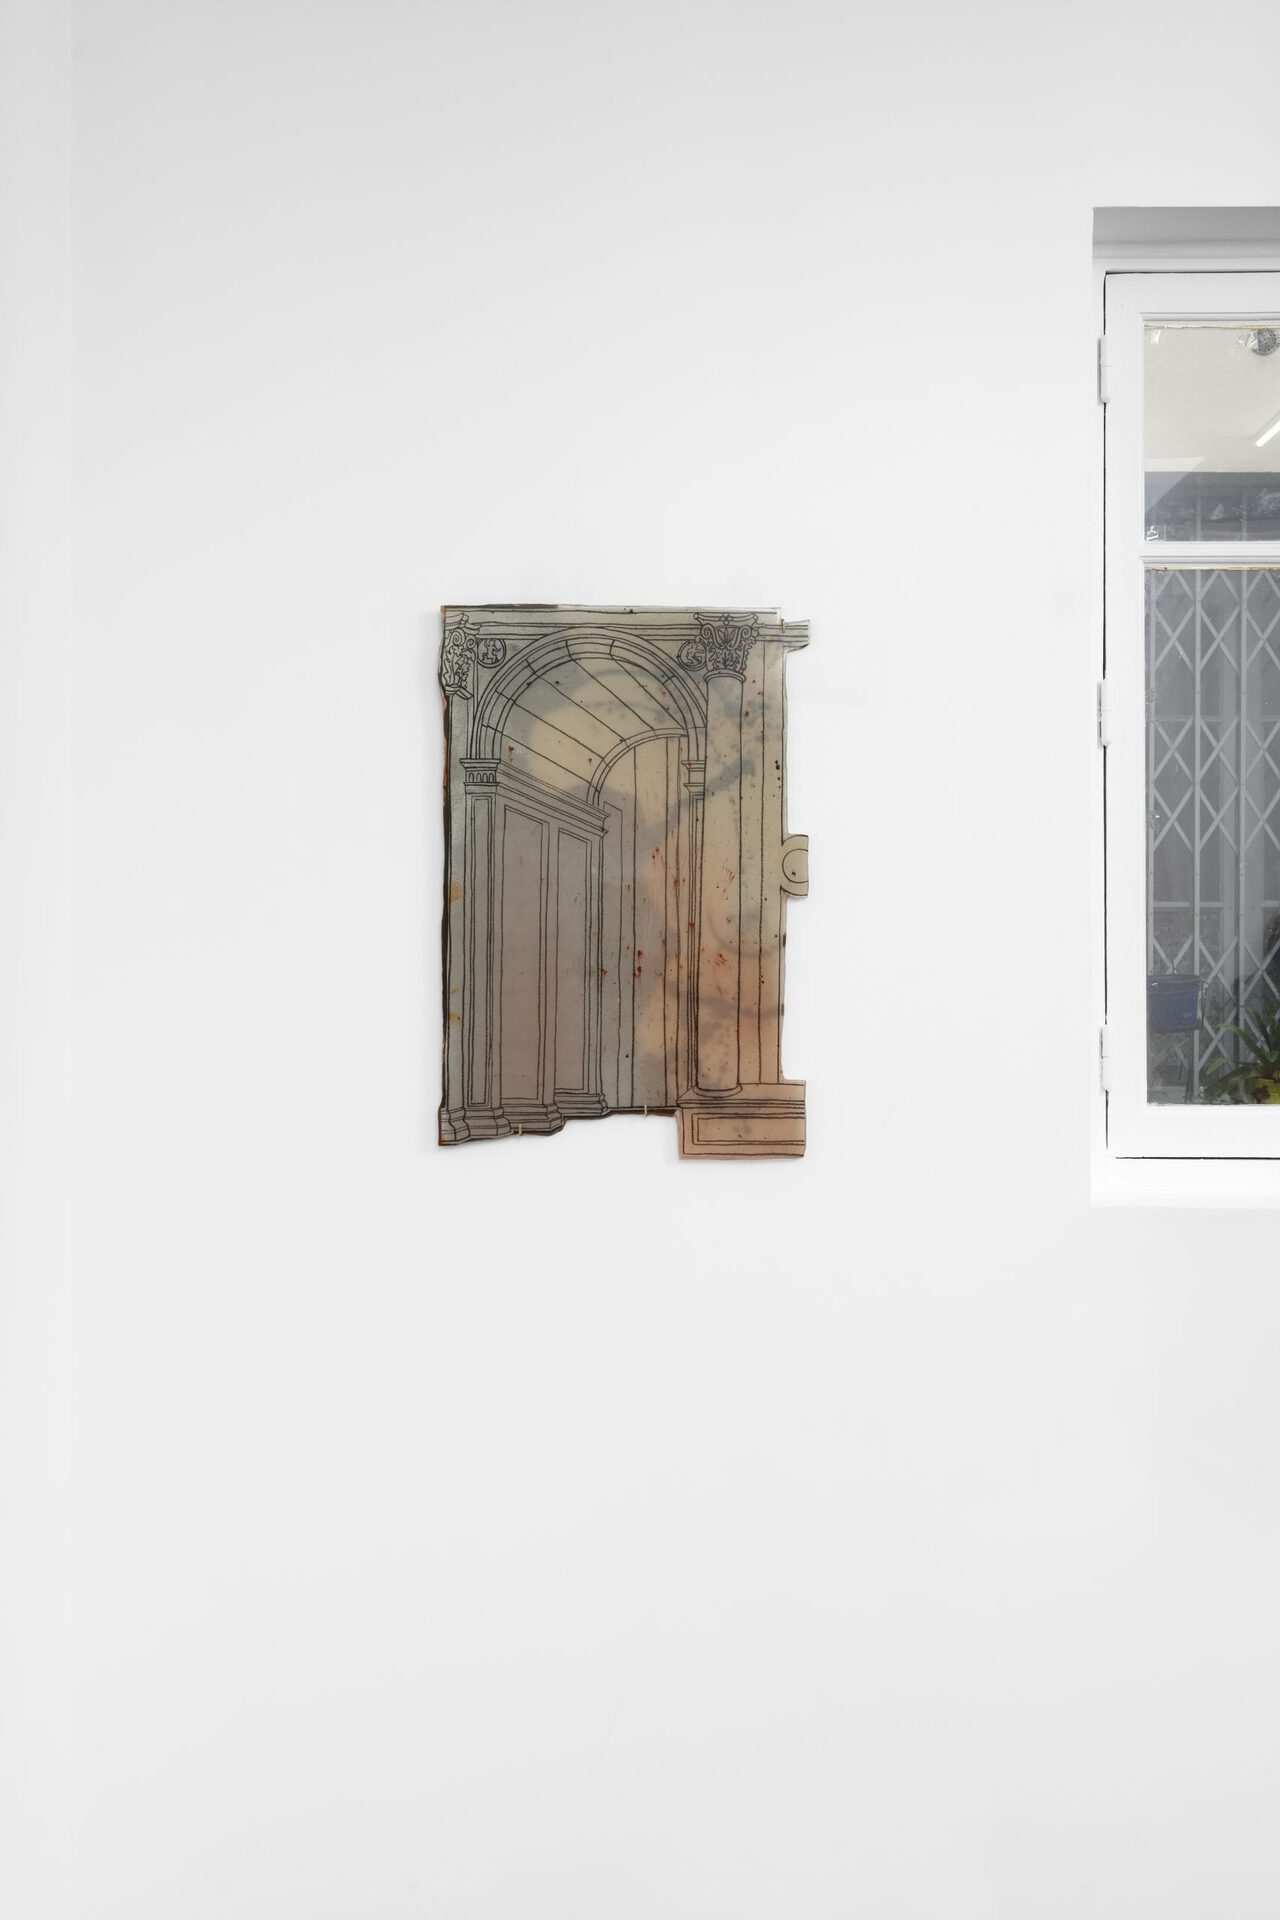 Zuzanna Czebatul, Vincenzo, 2020, resin, handcrafted paper, coal, pigments, 67 x 45 cm